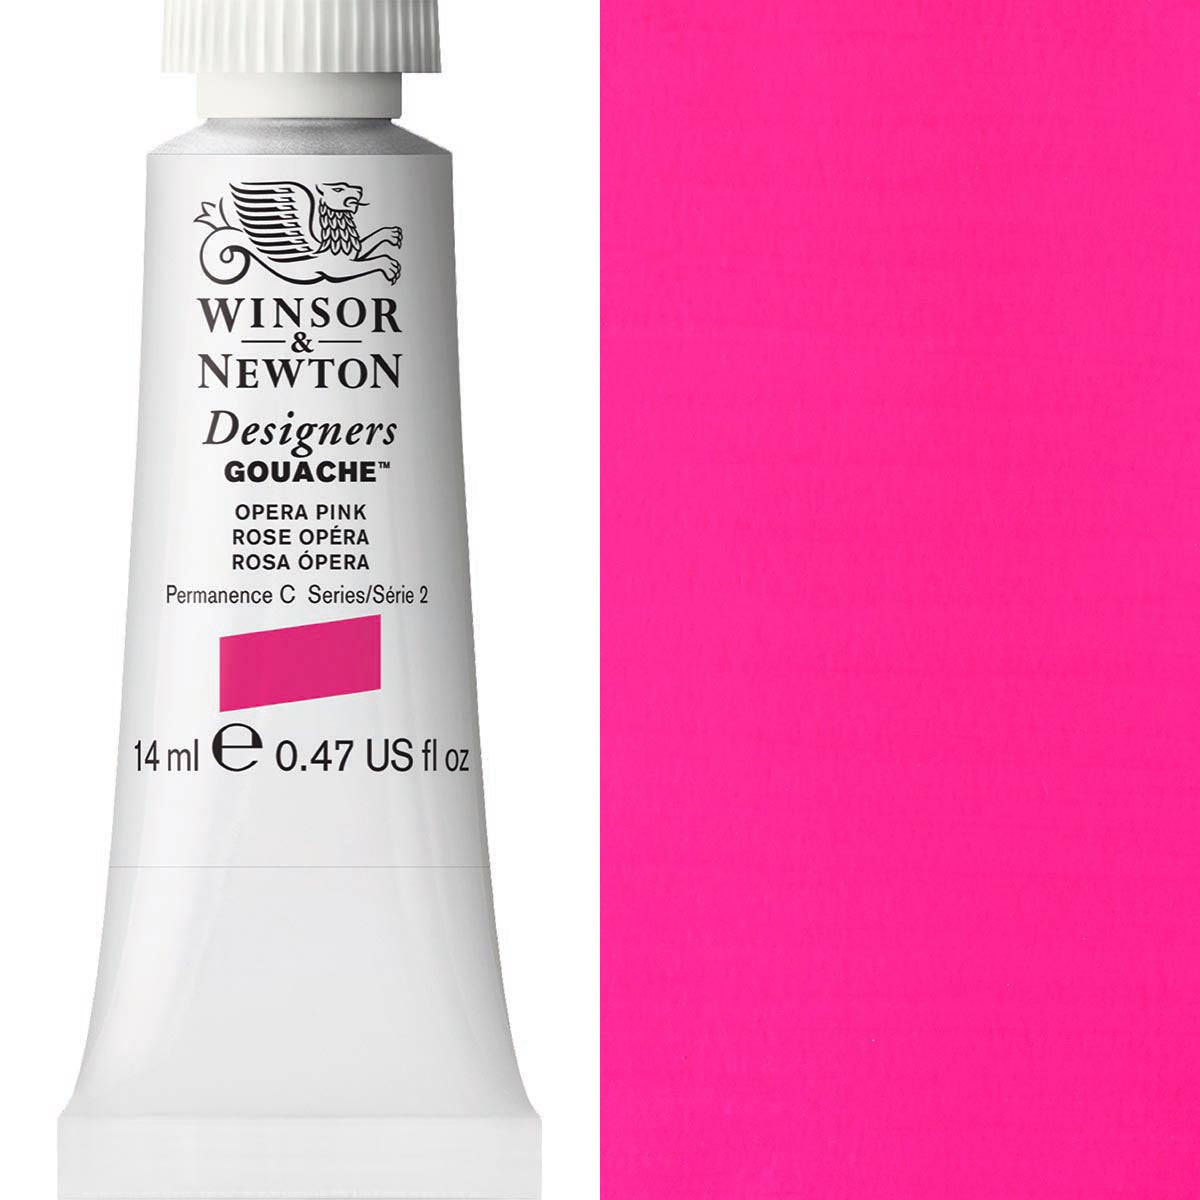 Winsor and Newton - Designers Gouache - 14ml - Opera Pink